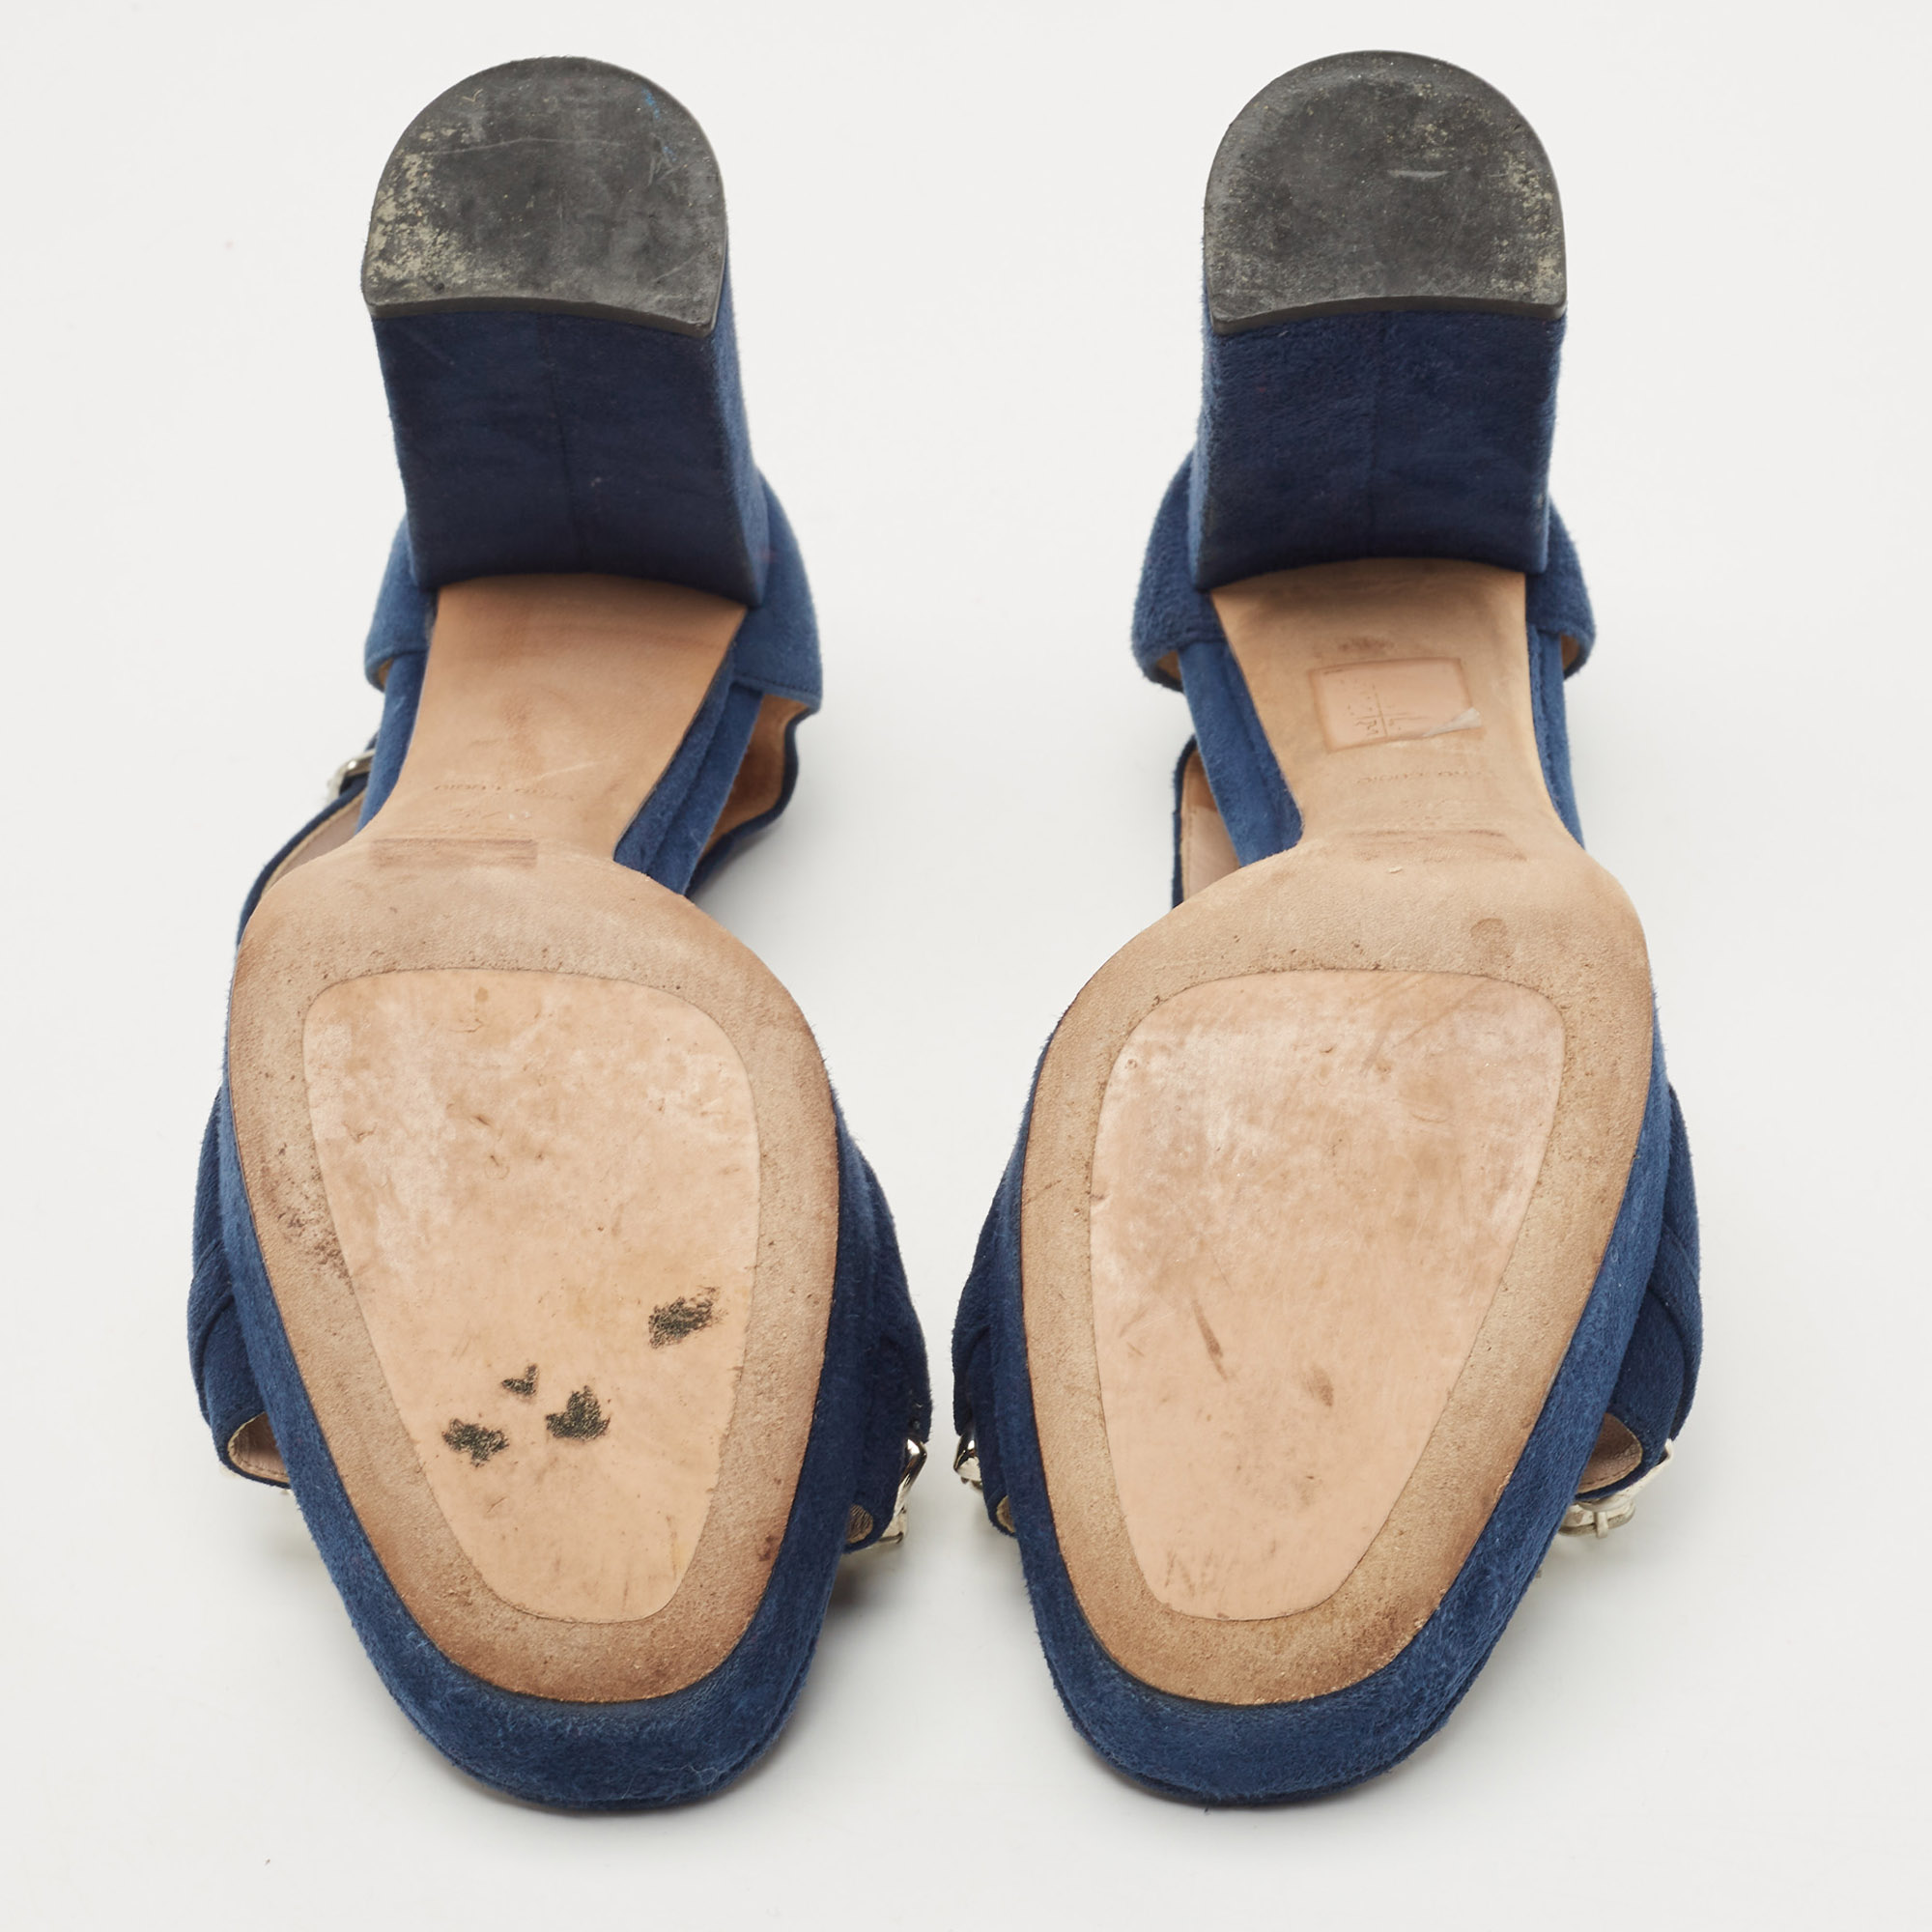 Miu Miu Navy Blue Suede Crystal Embellished Ankle Strap Sandals Size 37.5